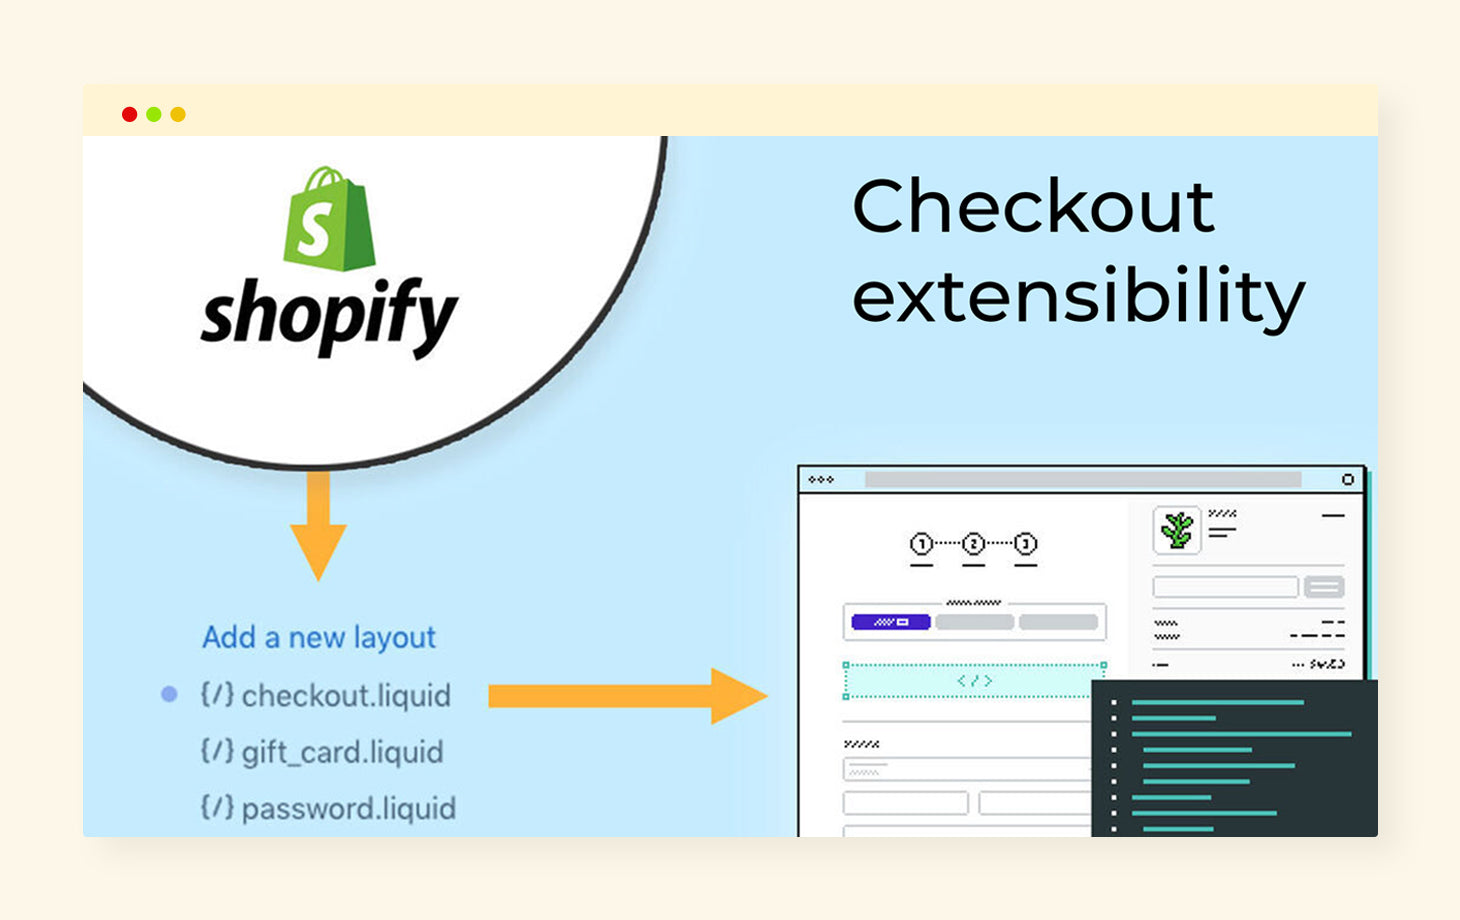 shopify checkout extensibility vs checkout.liquid